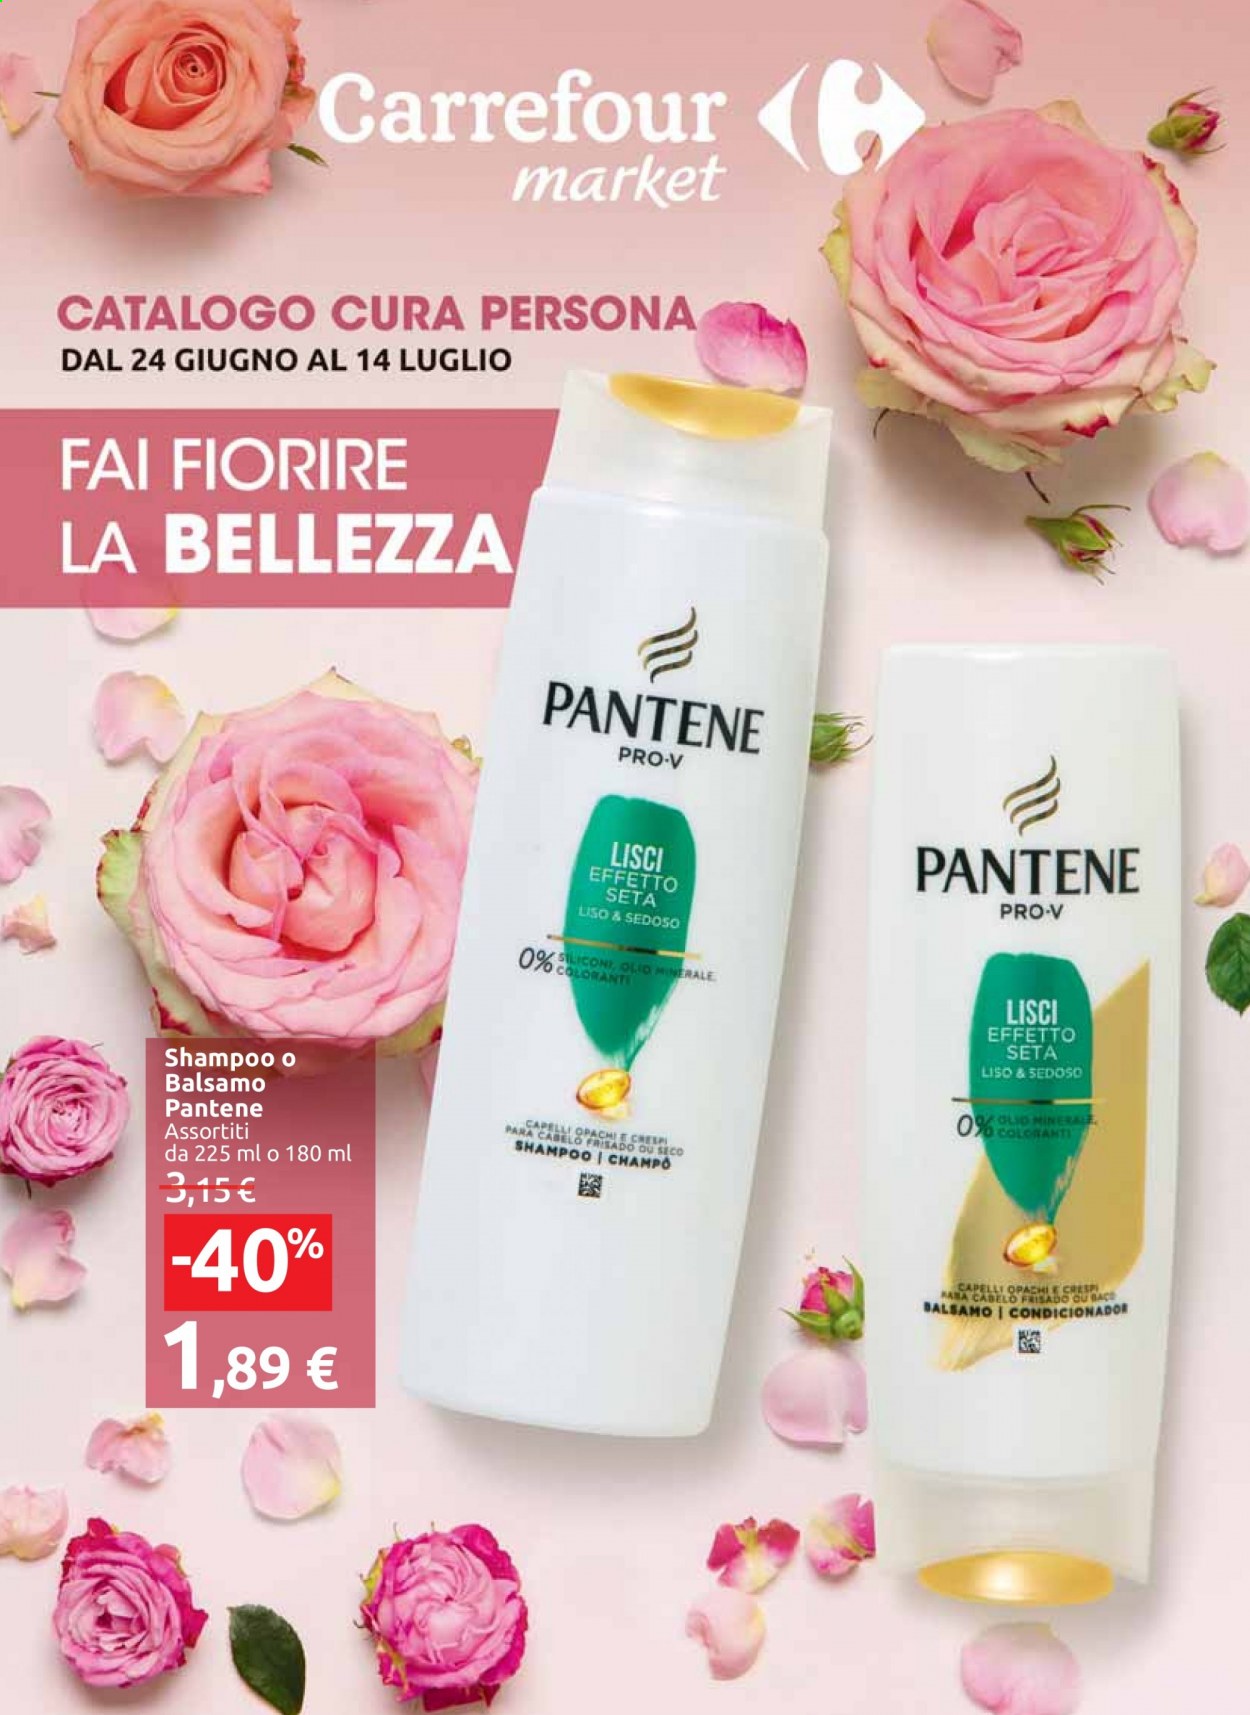 thumbnail - Volantino Carrefour - 24/6/2021 - 14/7/2021 - Prodotti in offerta - olio, Ace, balsamo, shampoo, Pantene. Pagina 1.